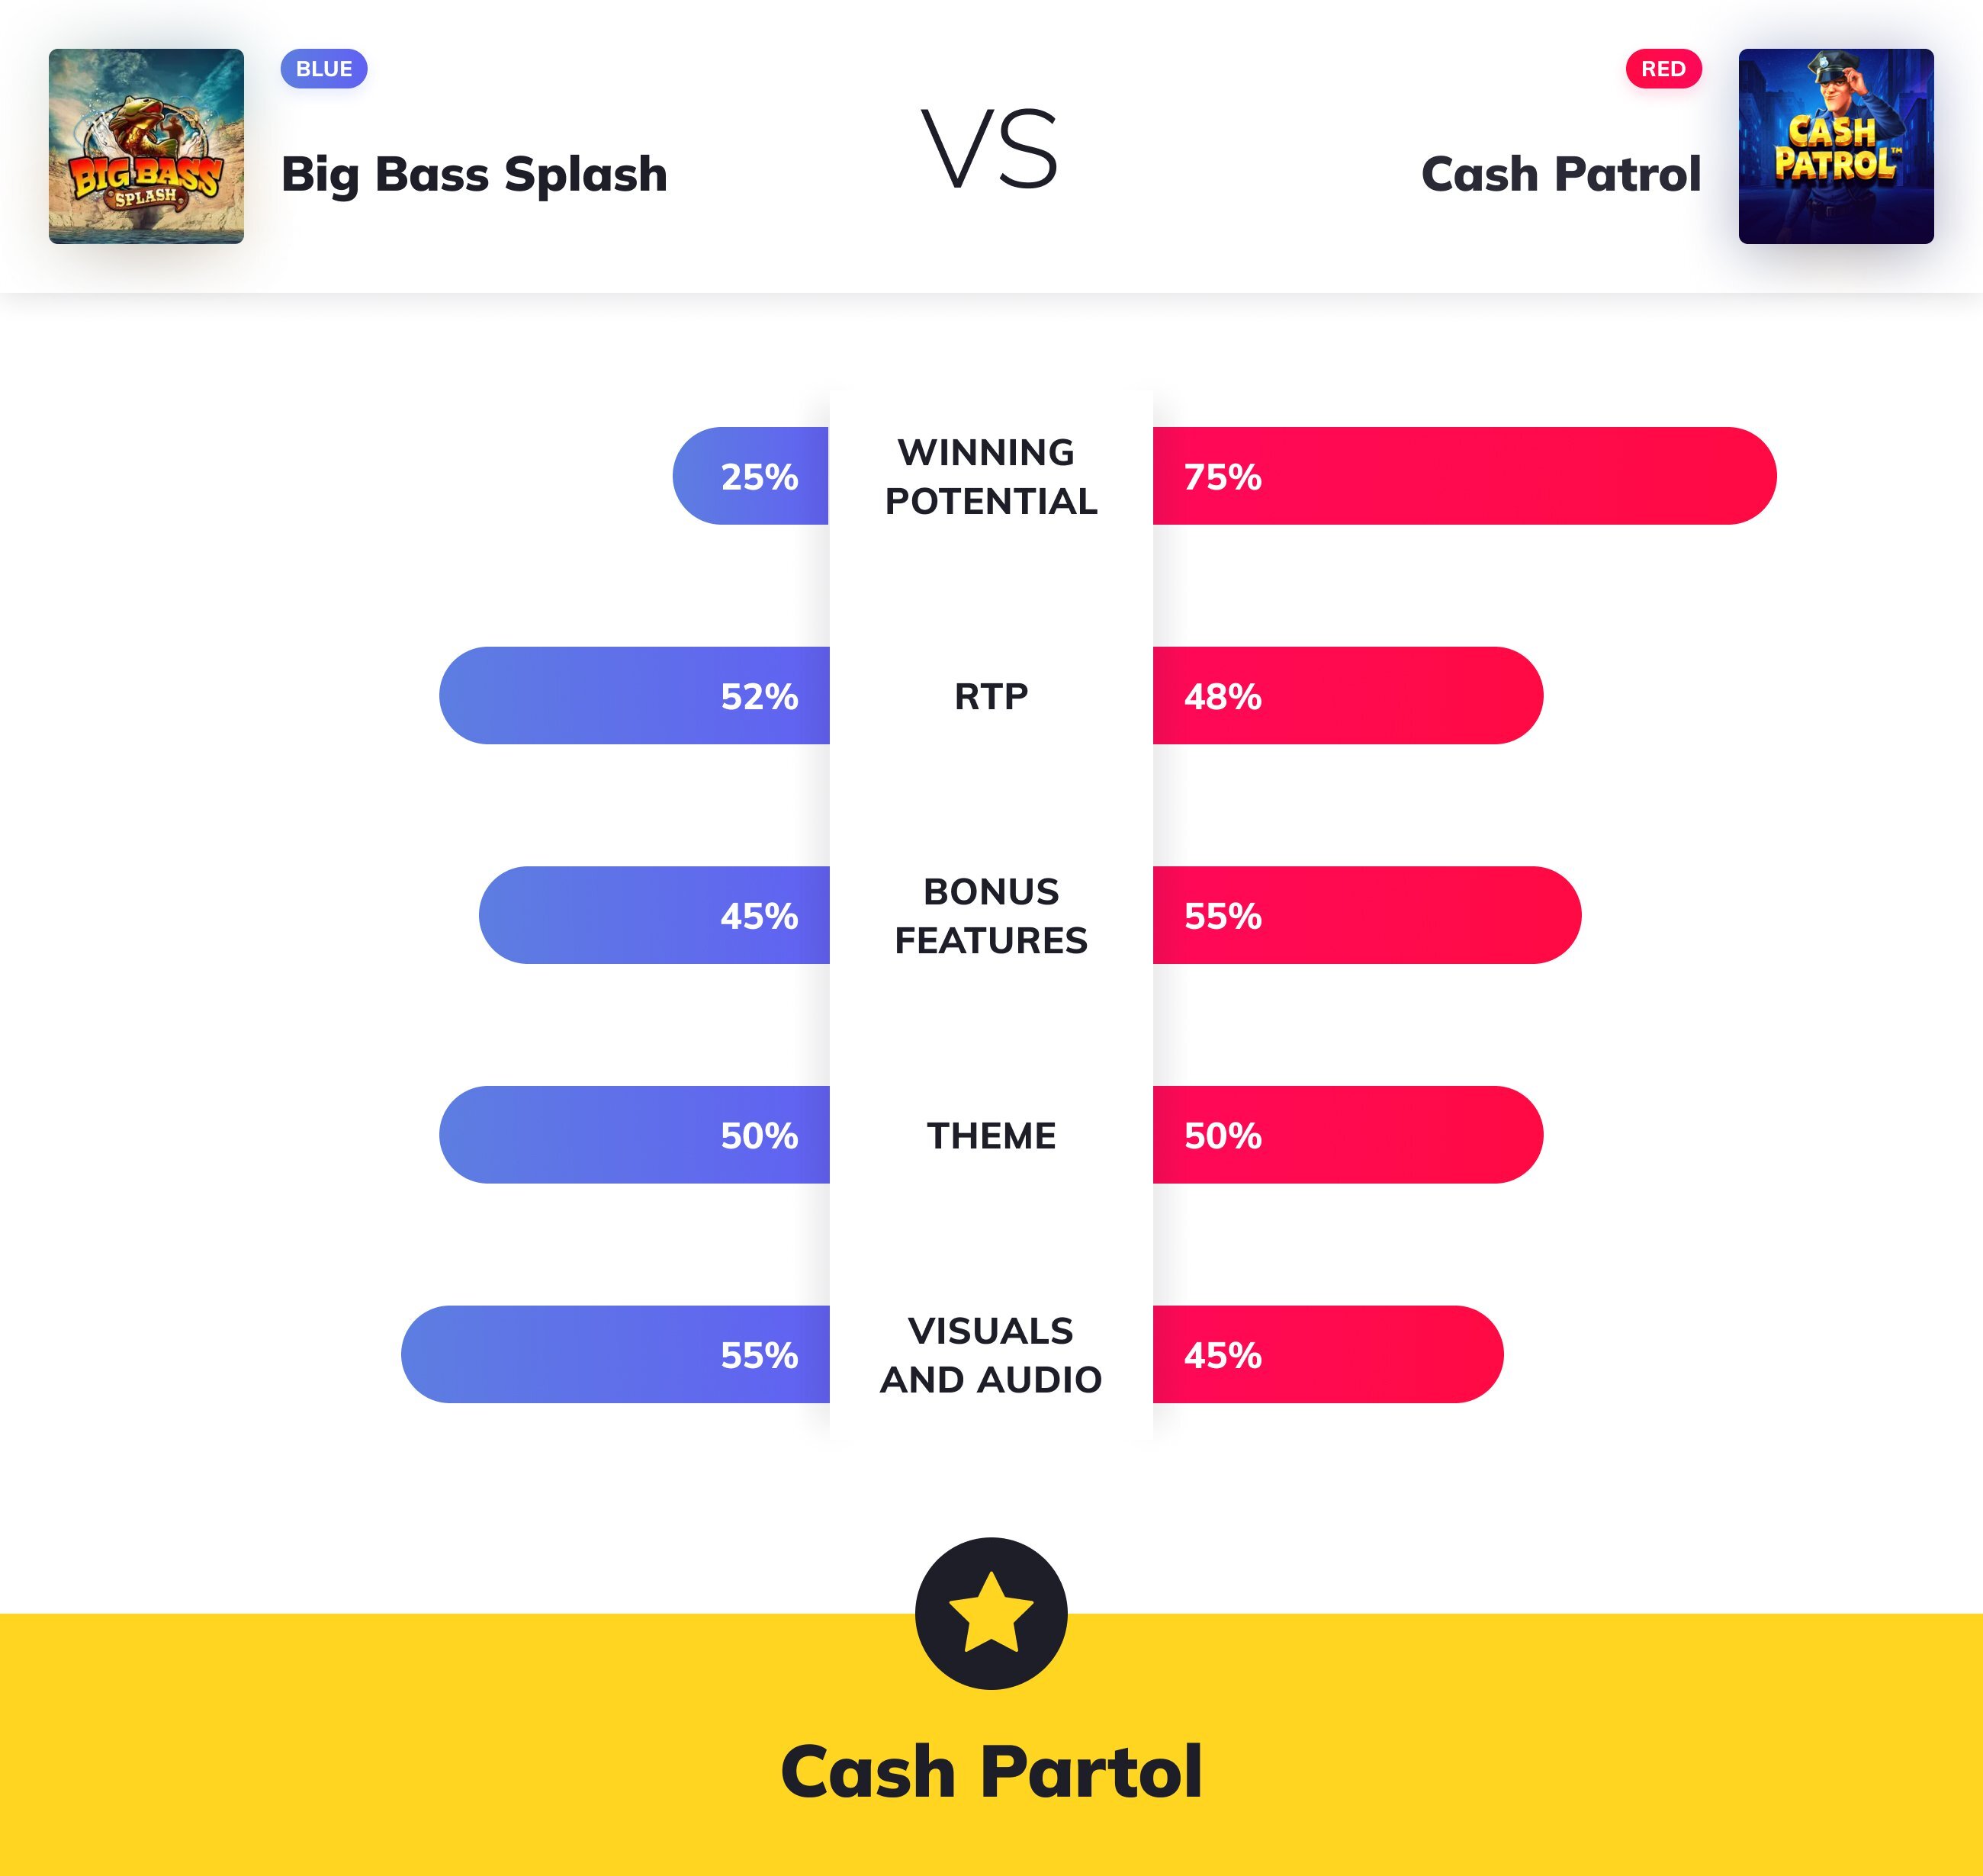 Slot Wars - Big Bass Splash VS Cash Patrol